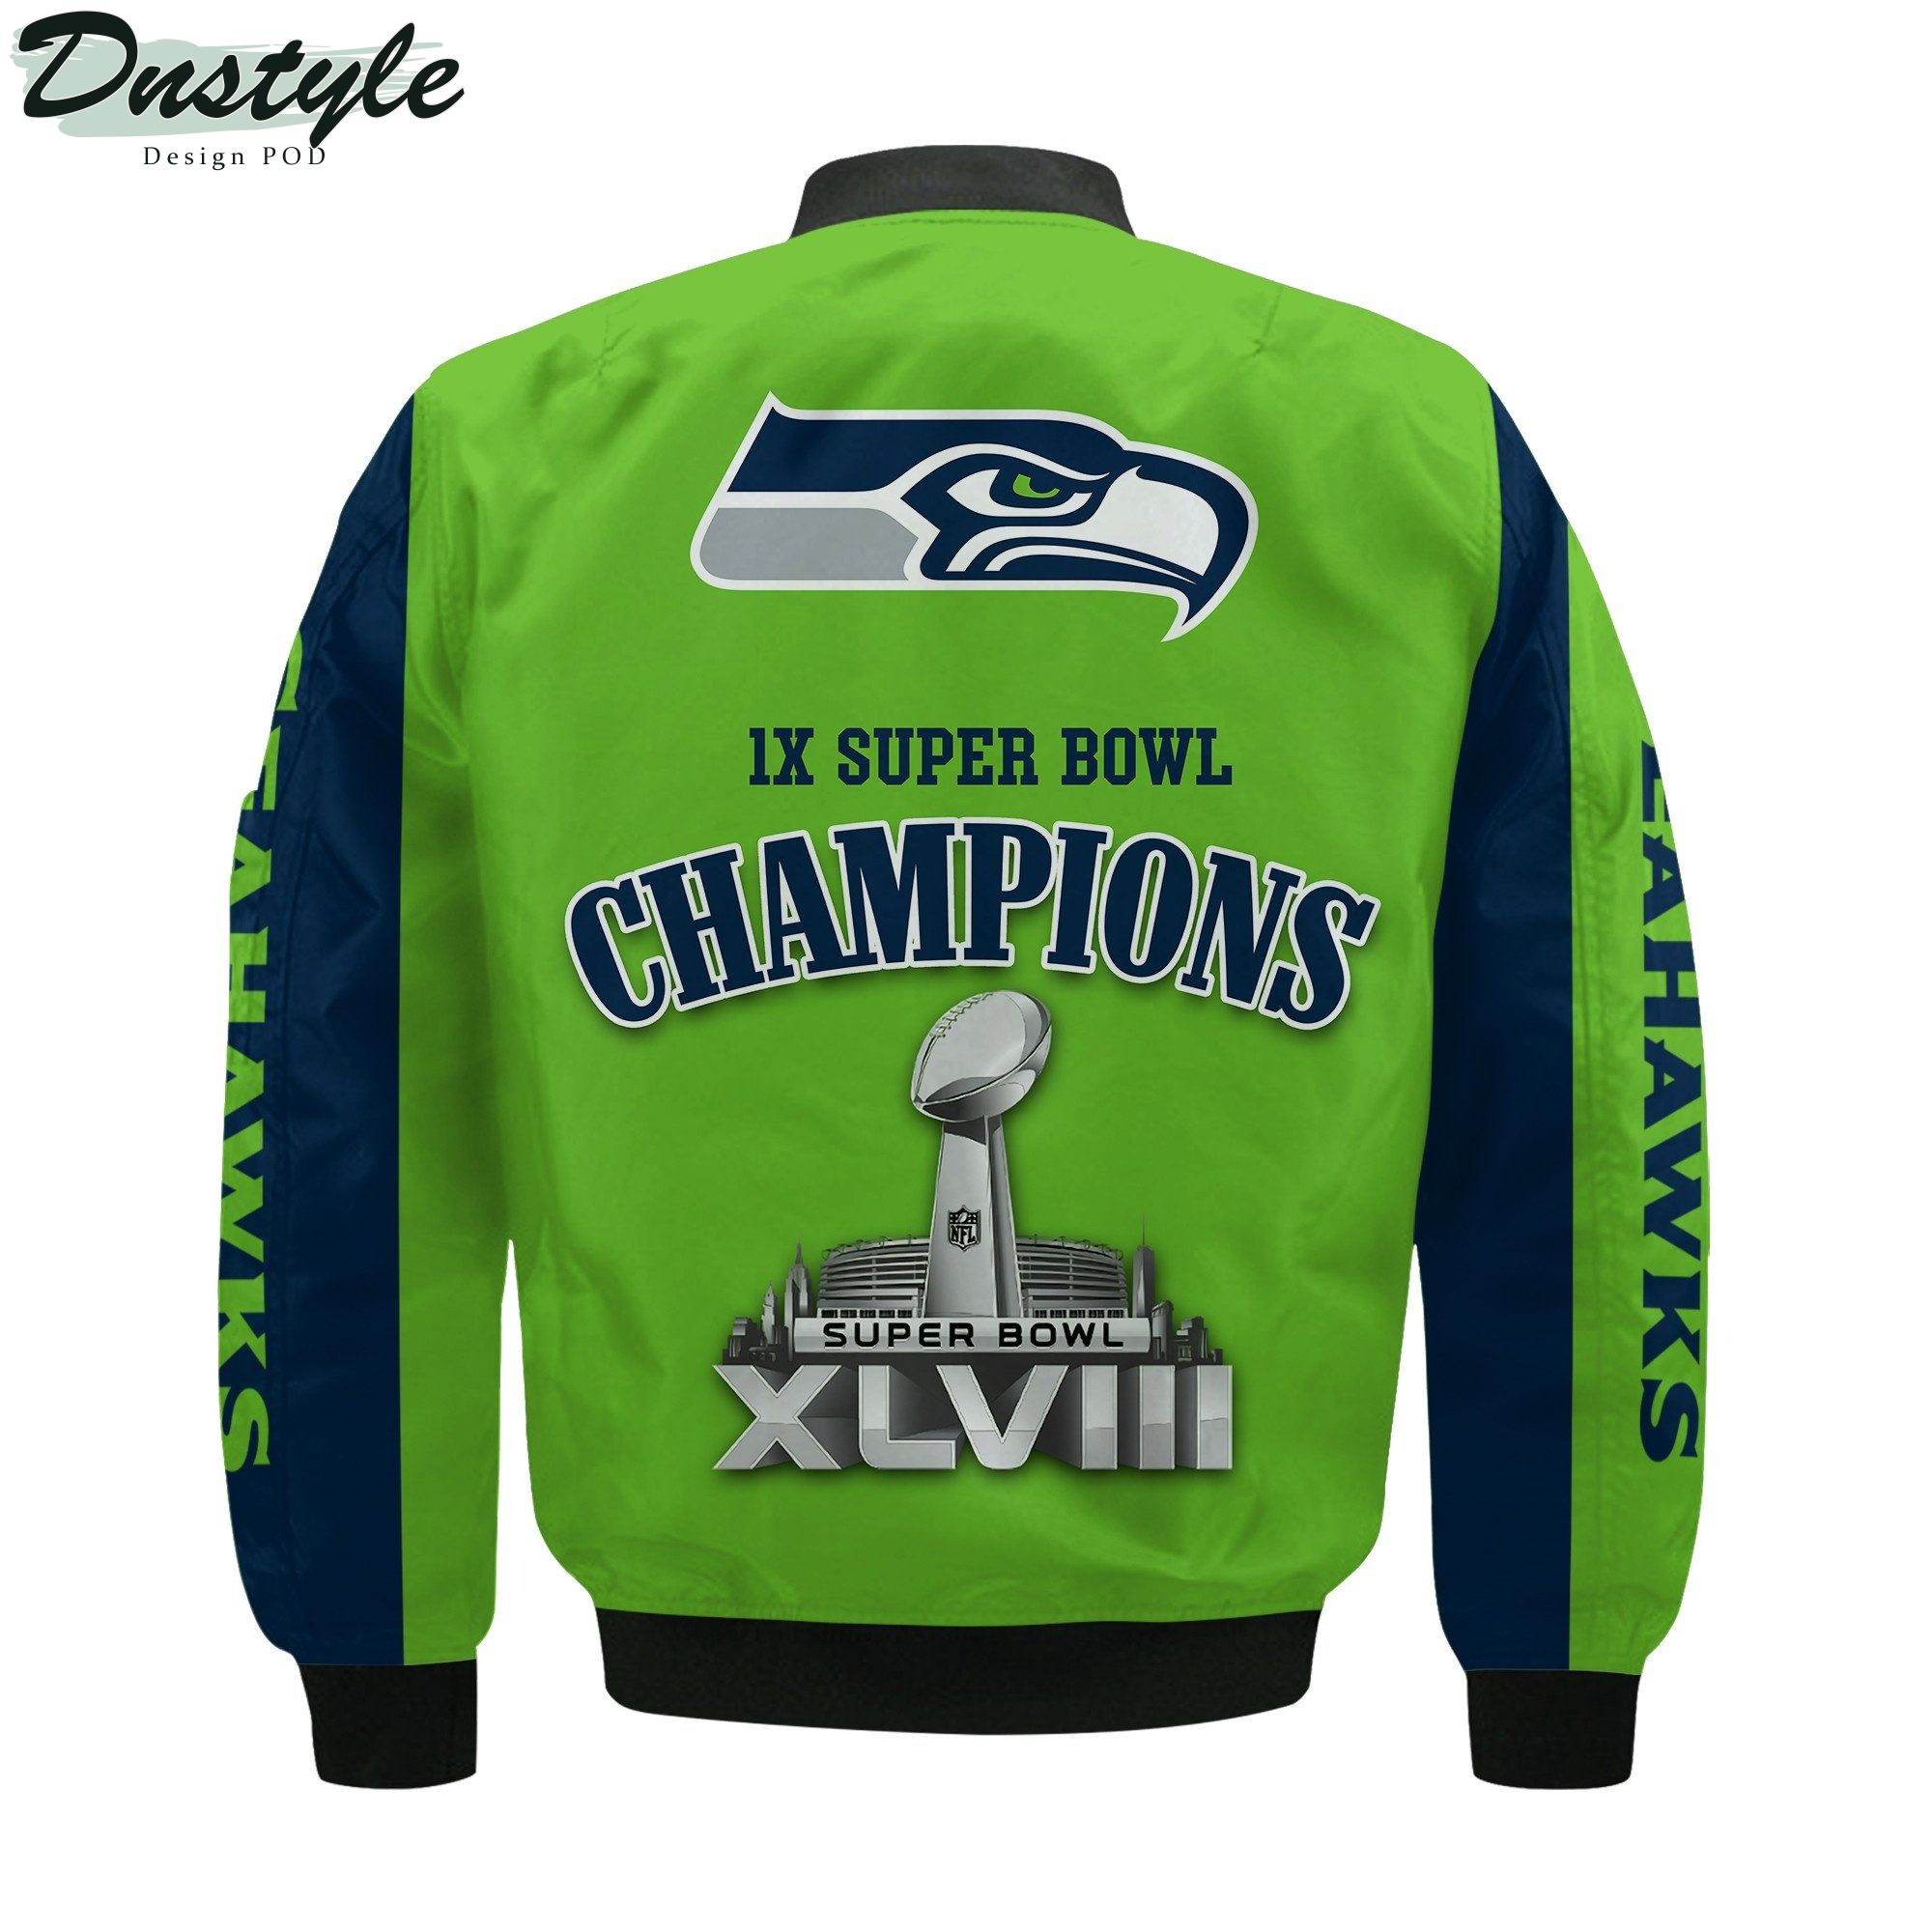 Seattle Seahawks NFL 1X Super Bowl Champions Custom Name Bomber Jacket